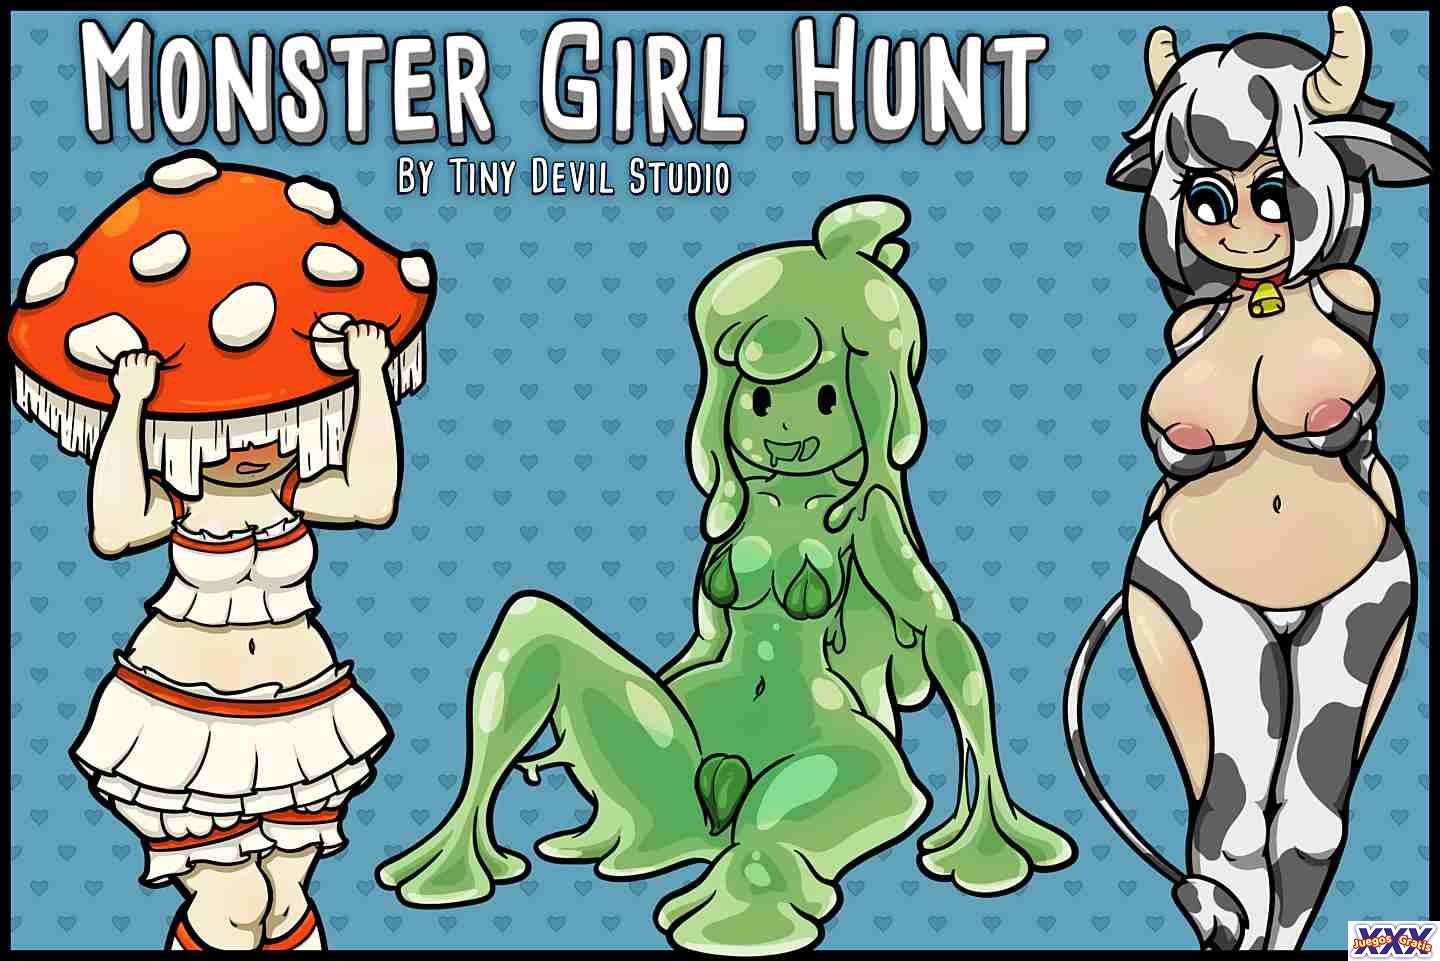 MONSTER GIRL HUNT [V0.2.99] [TINY DEVIL STUDIO]